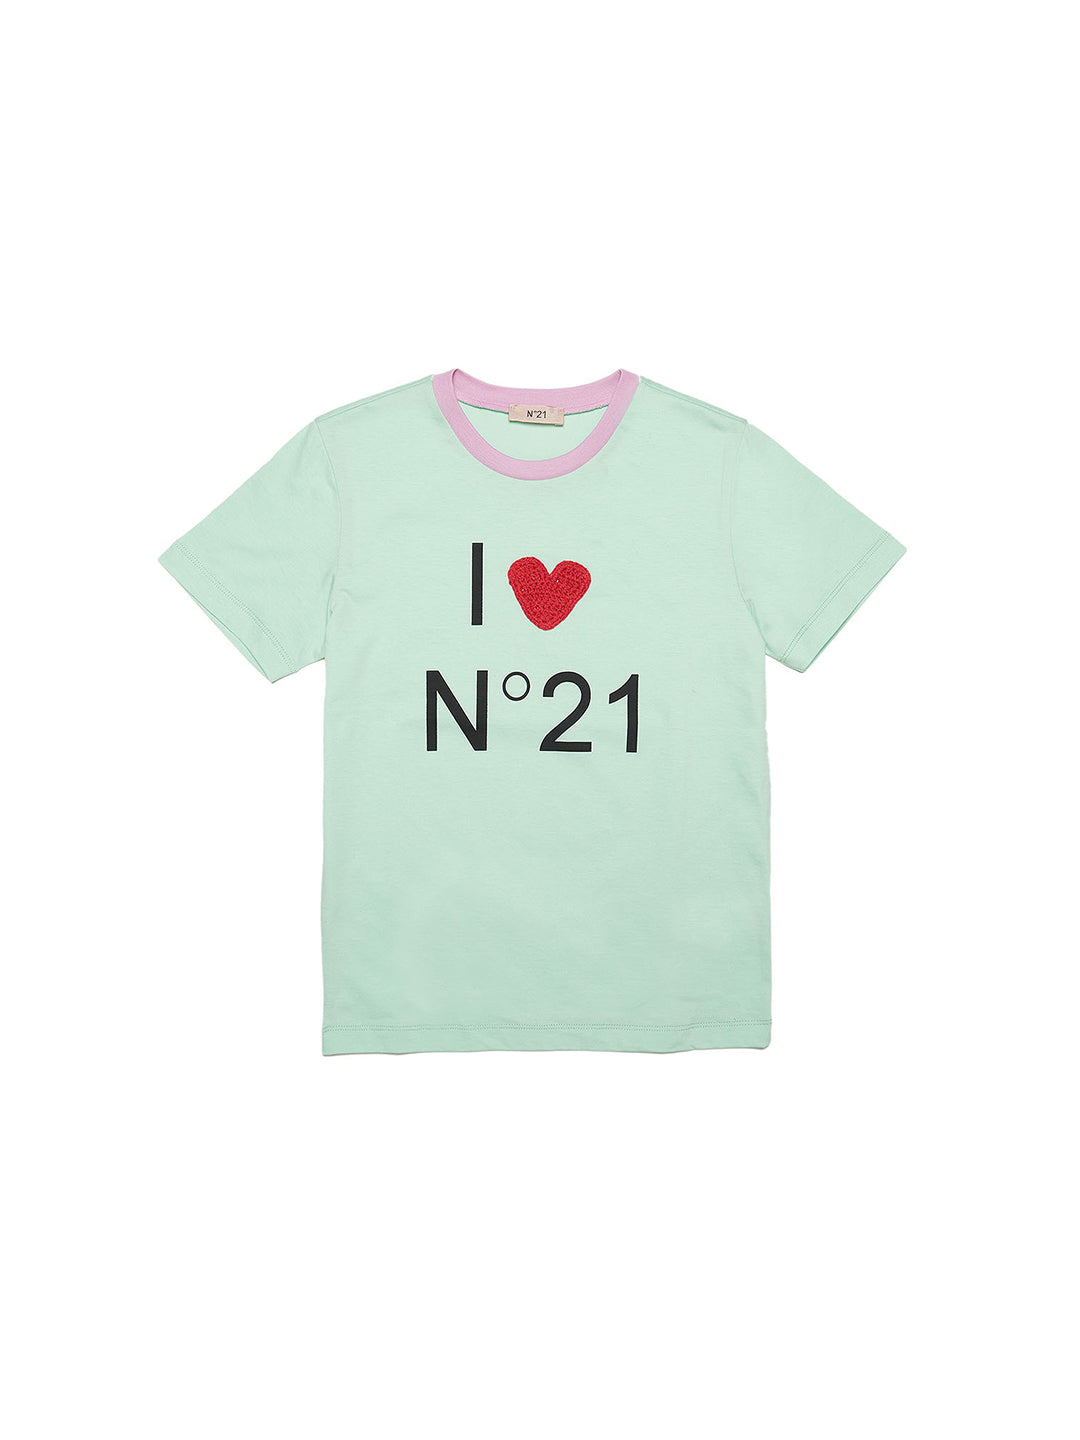 N21 kids t shirt verde con logo